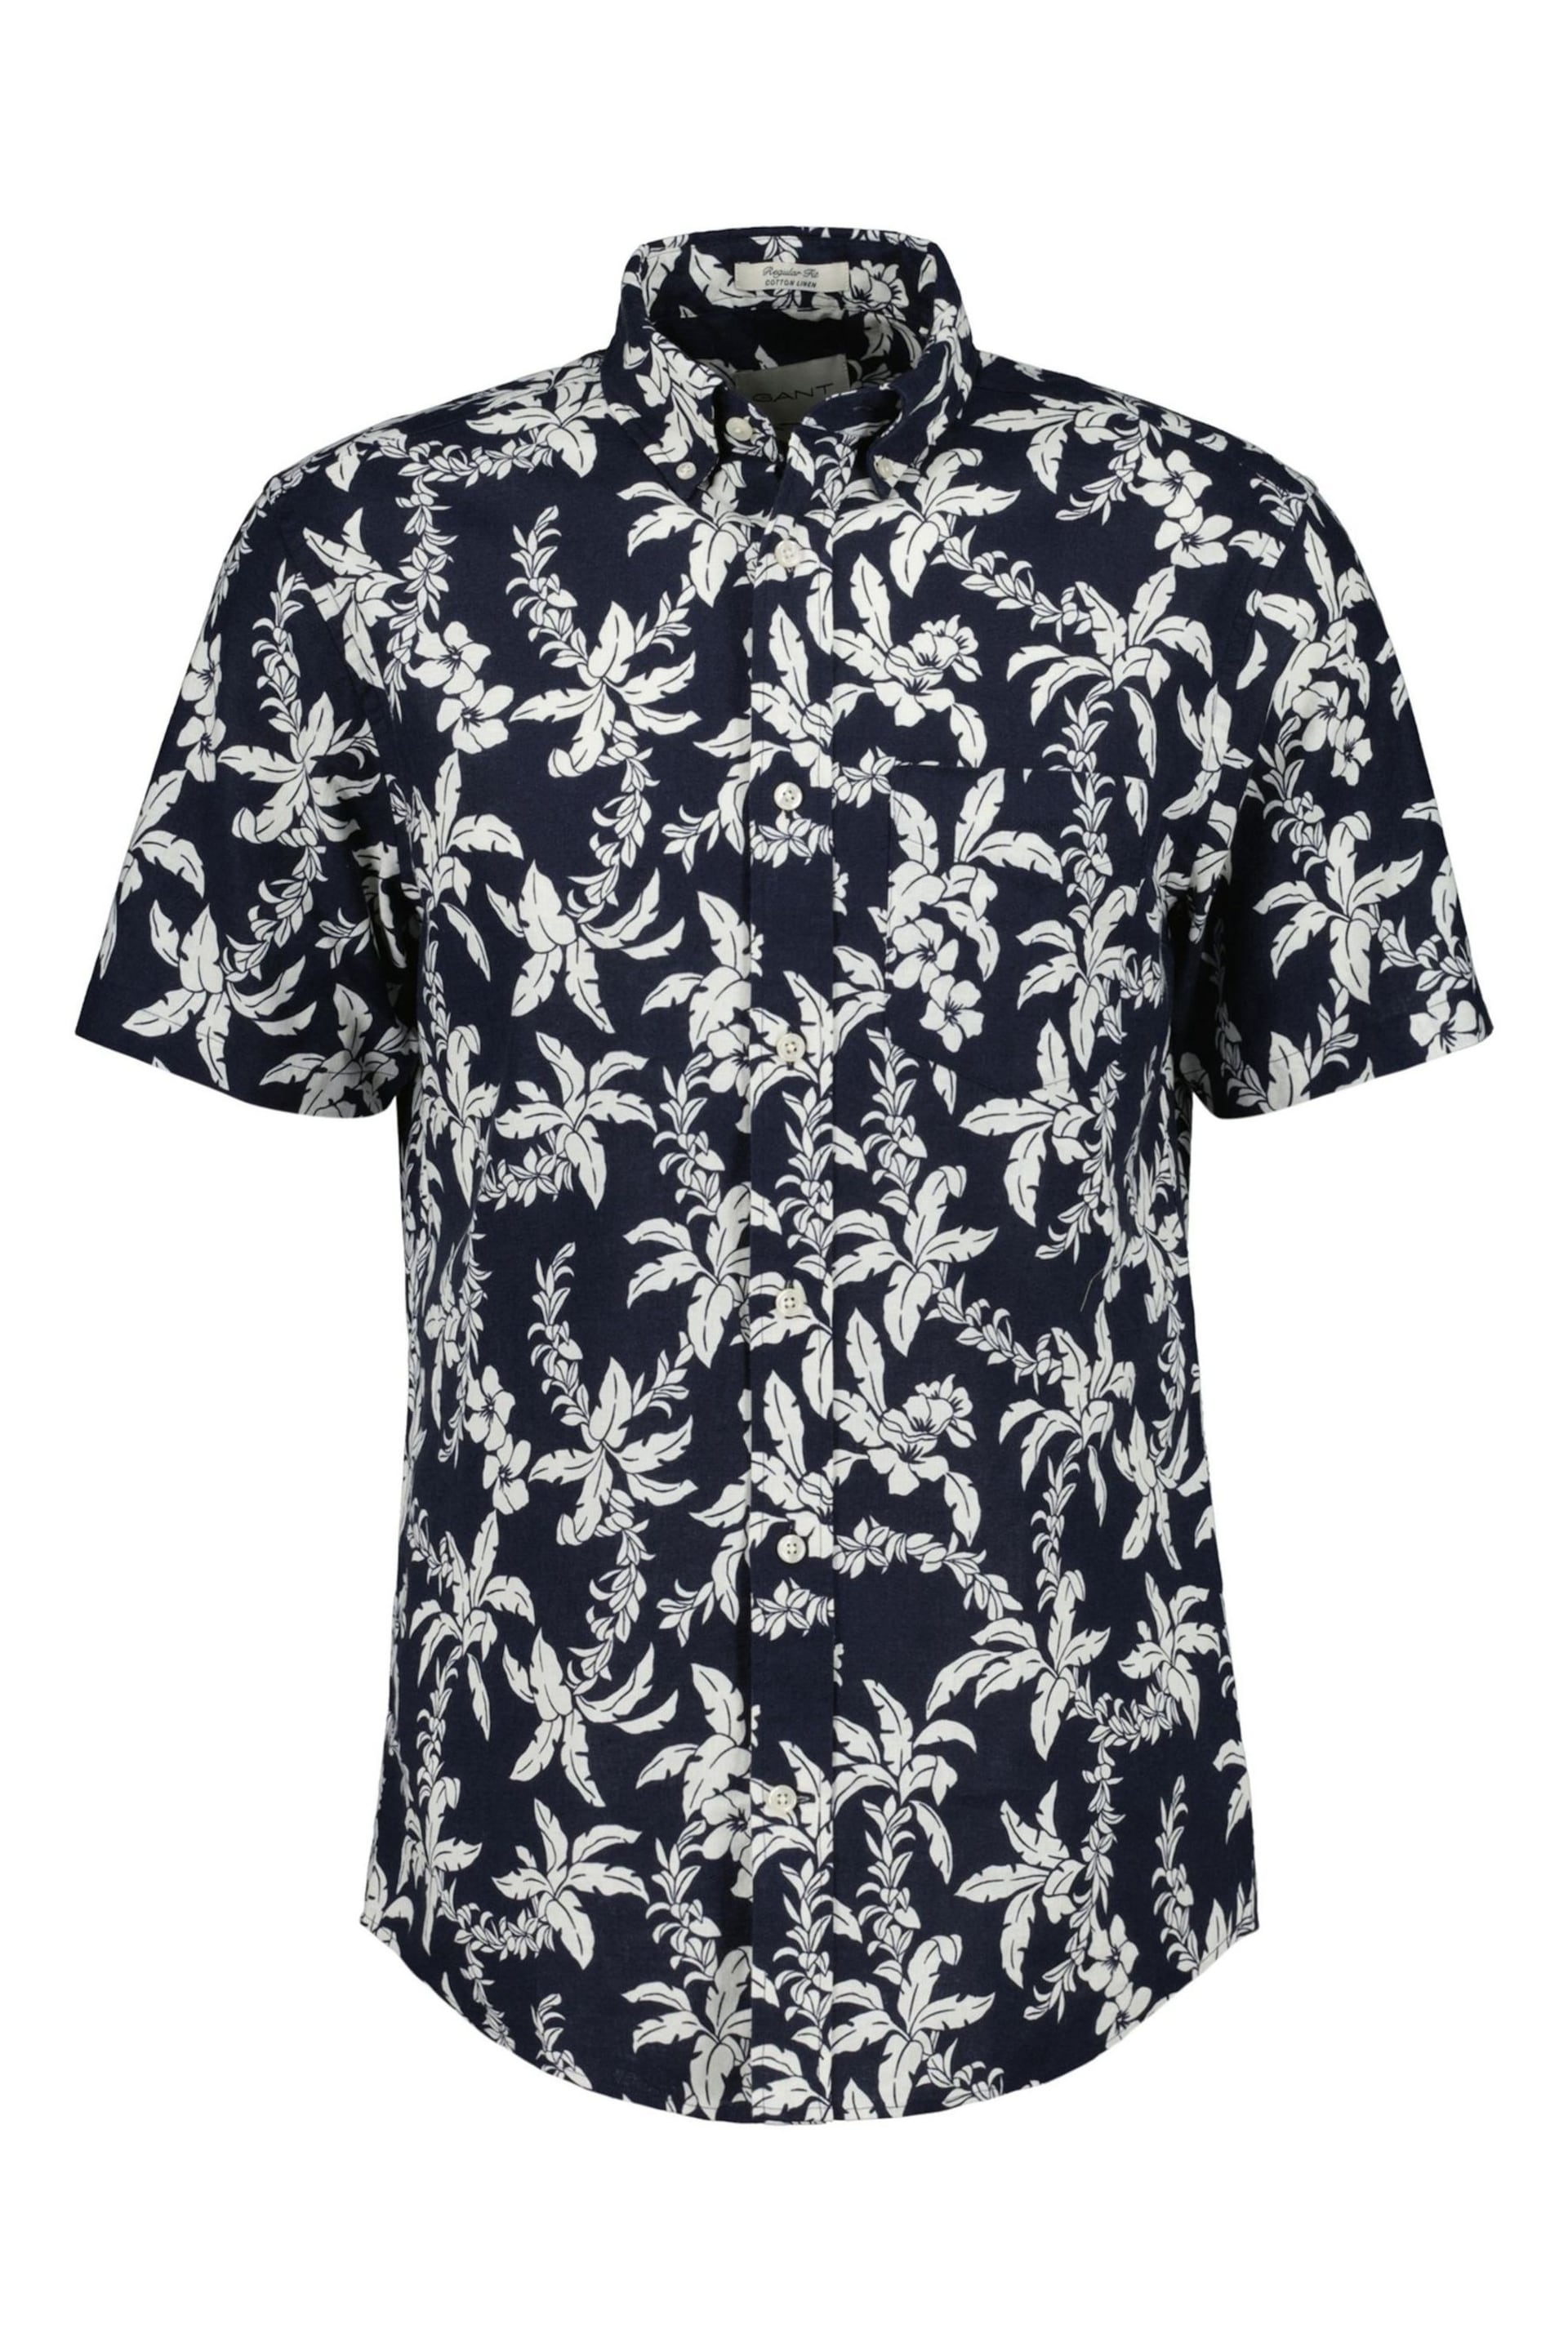 GANT Regular Fit Palm Print Cotton Linen Short Sleeve Shirt - Image 1 of 1